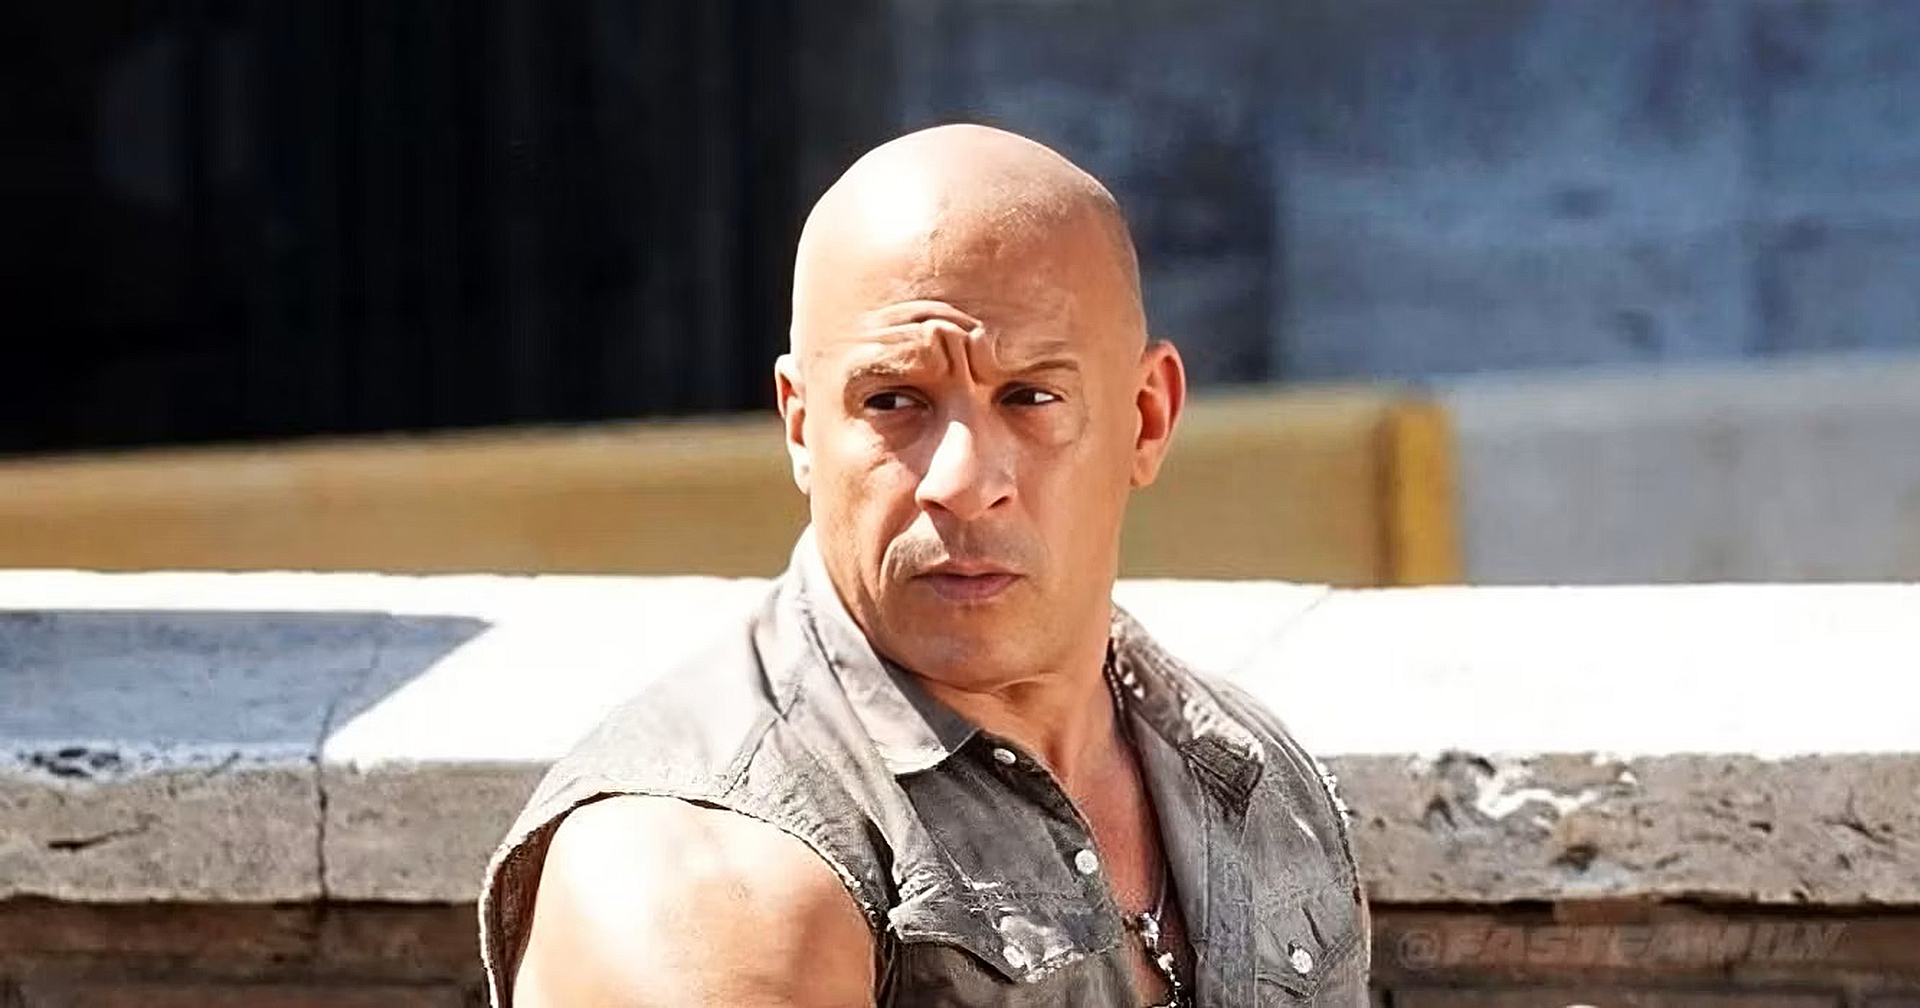 Vin Diesel ยืนยัน กำลังพัฒนาหนังภาคแยกจาก ‘Fast and Furious’ หลายเรื่องในขณะนี้